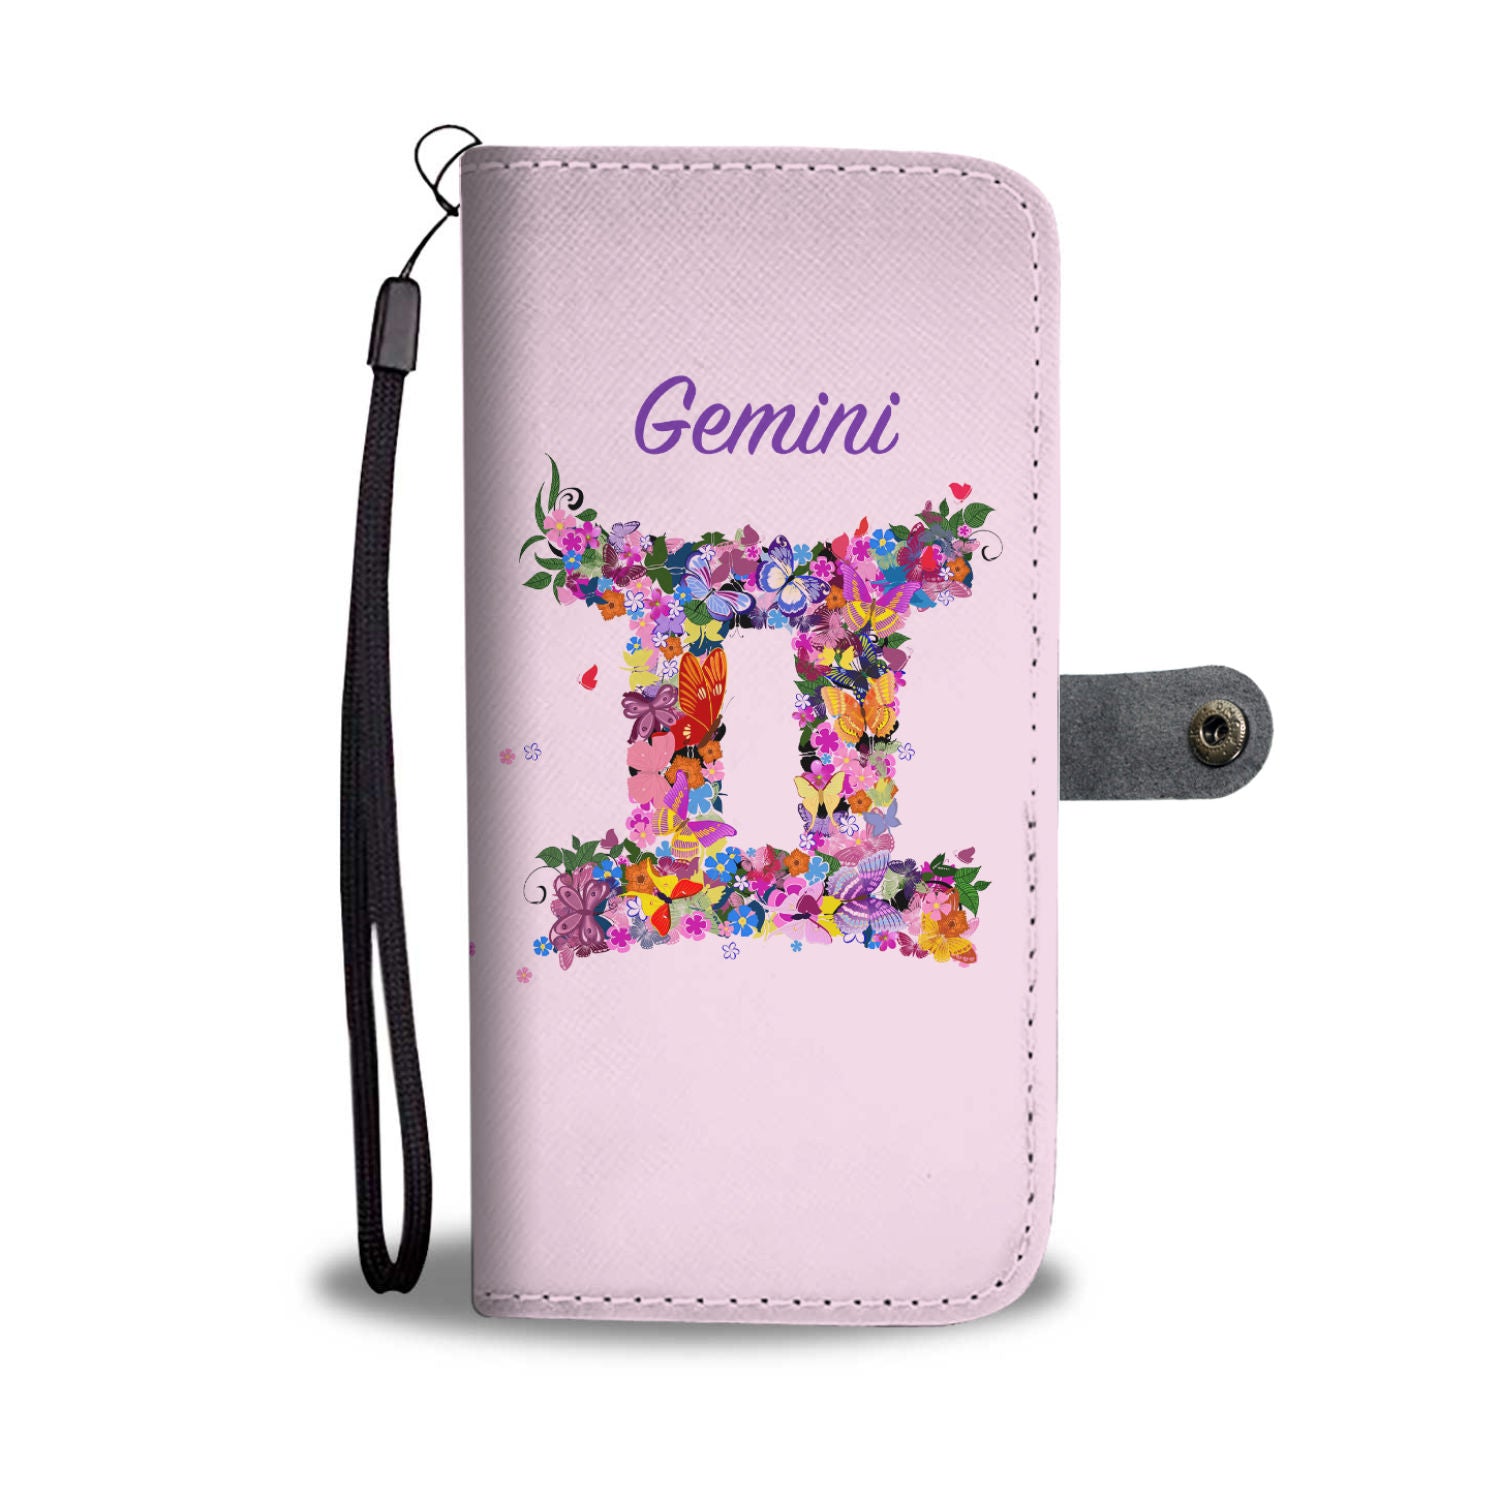 Gemini Floral Phone Wallet